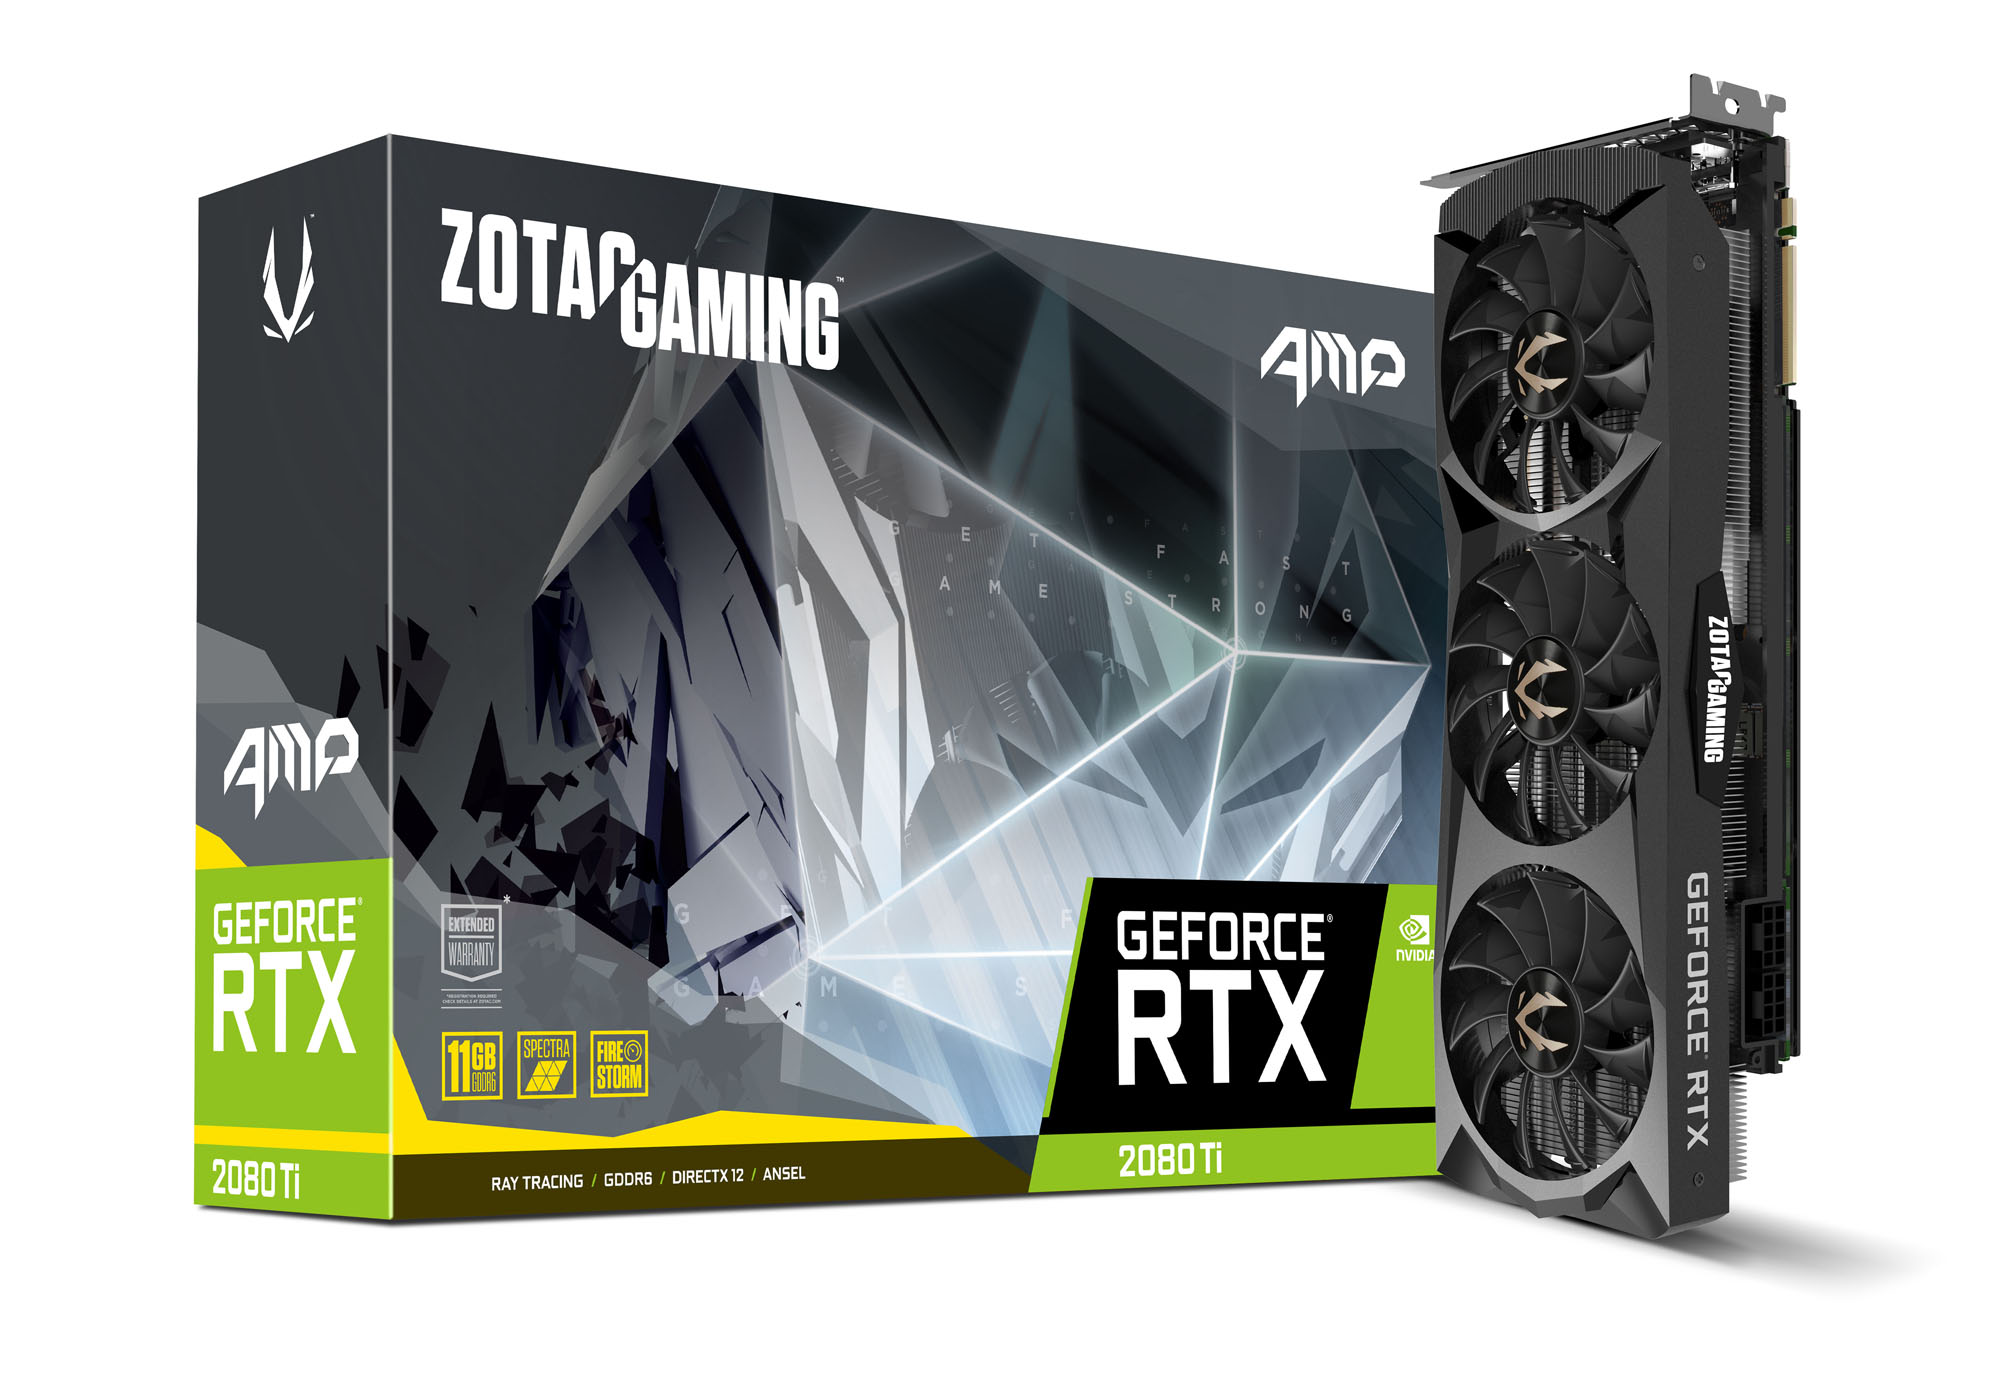 ZOTAC GAMING GeForce RTX 20シリーズ